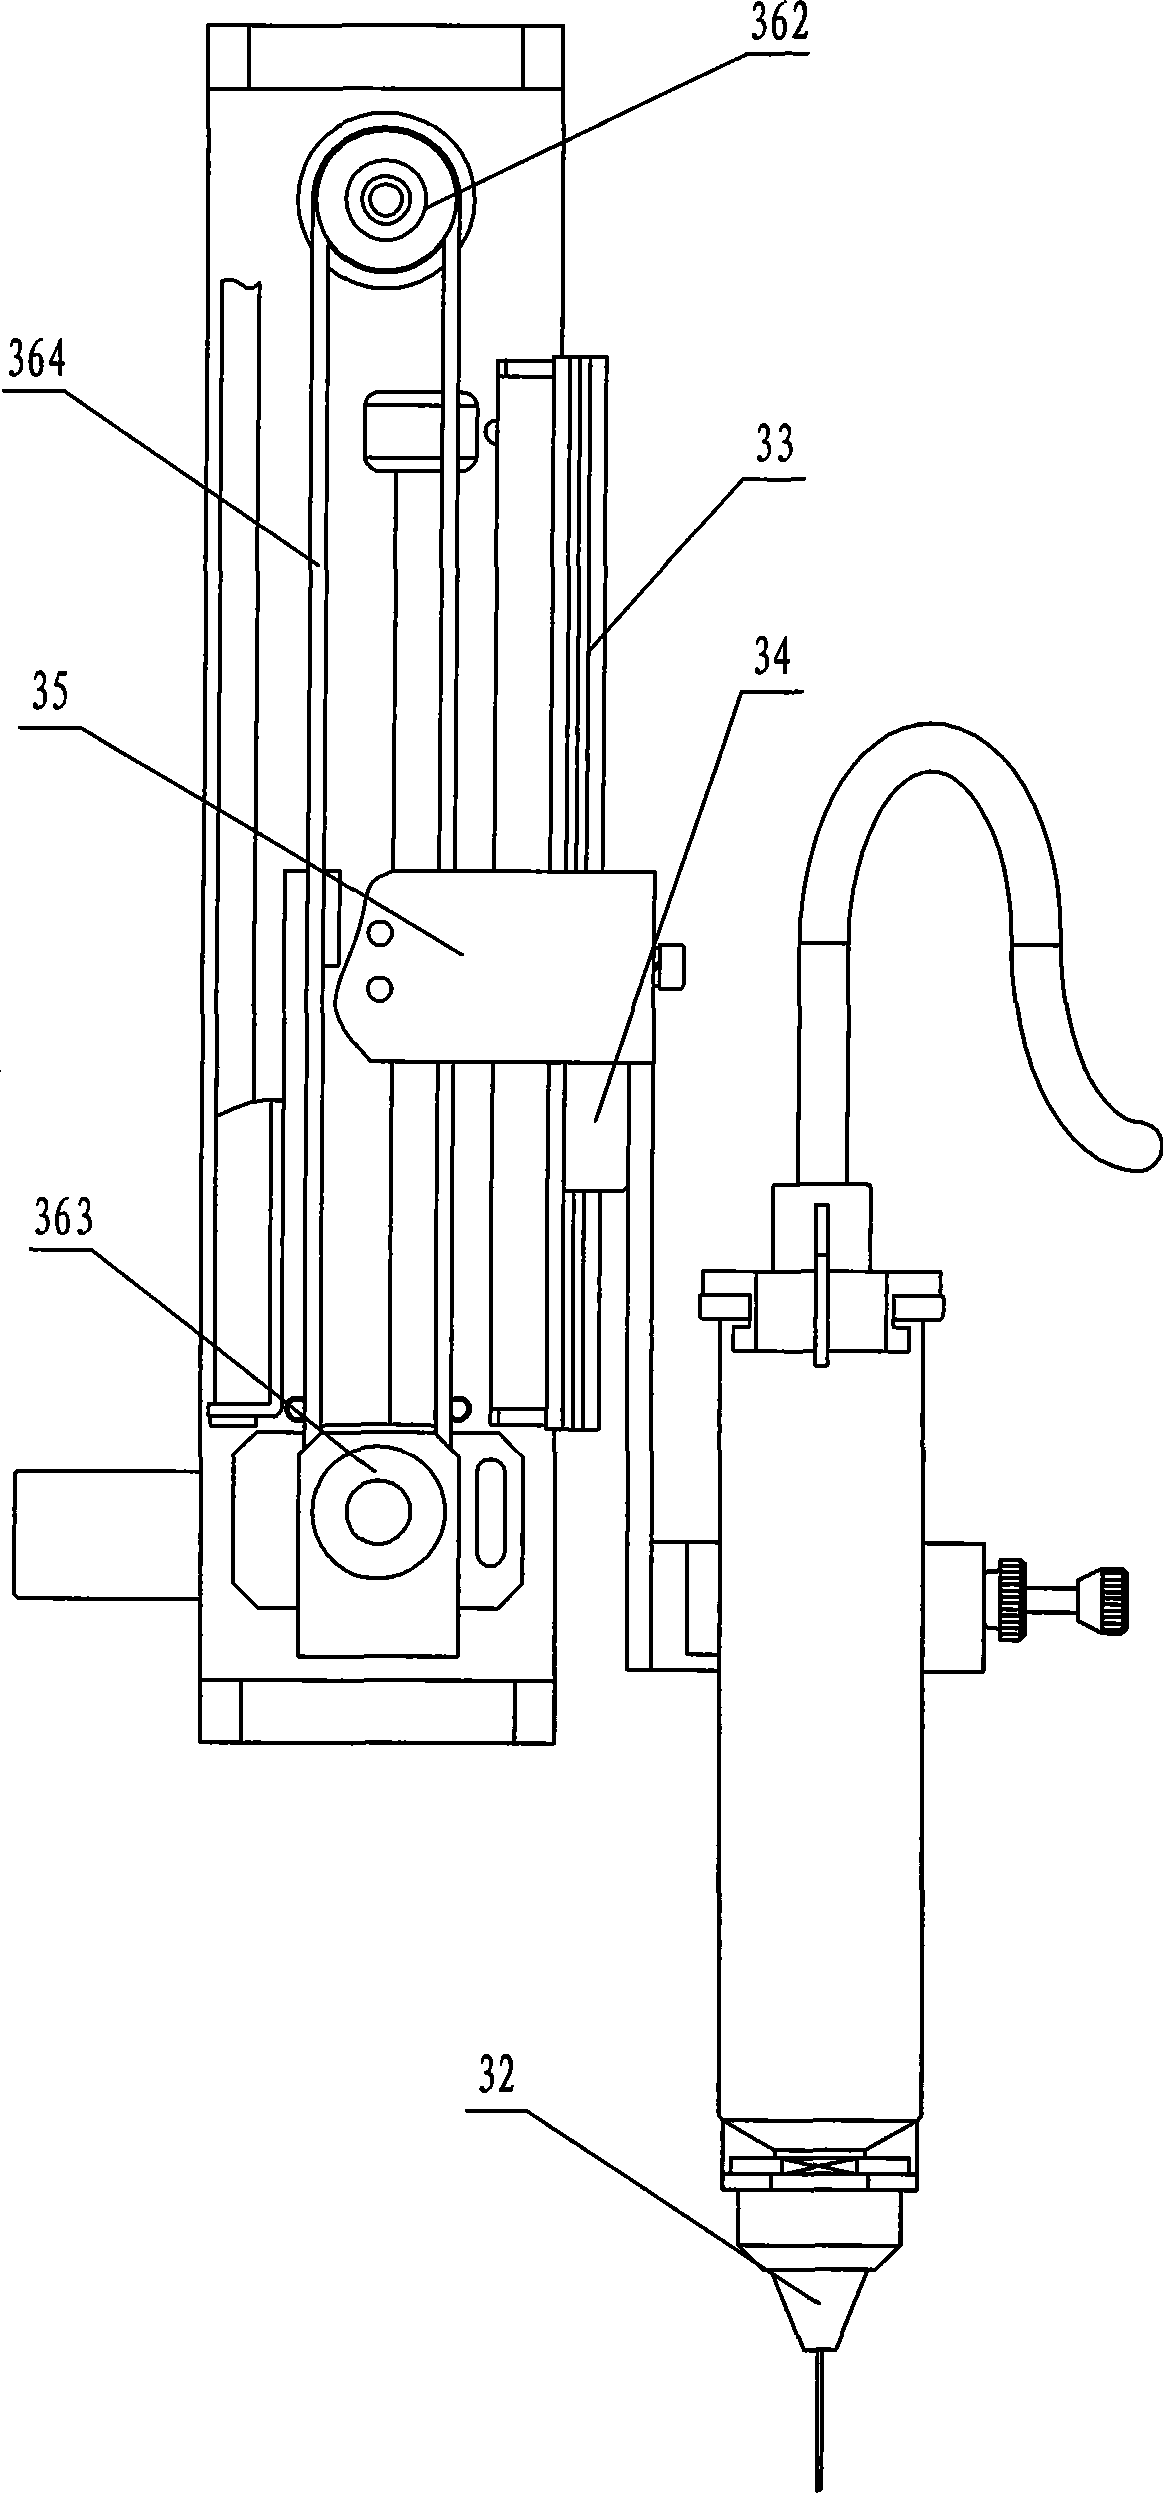 Full-automatic glue-dropping machine